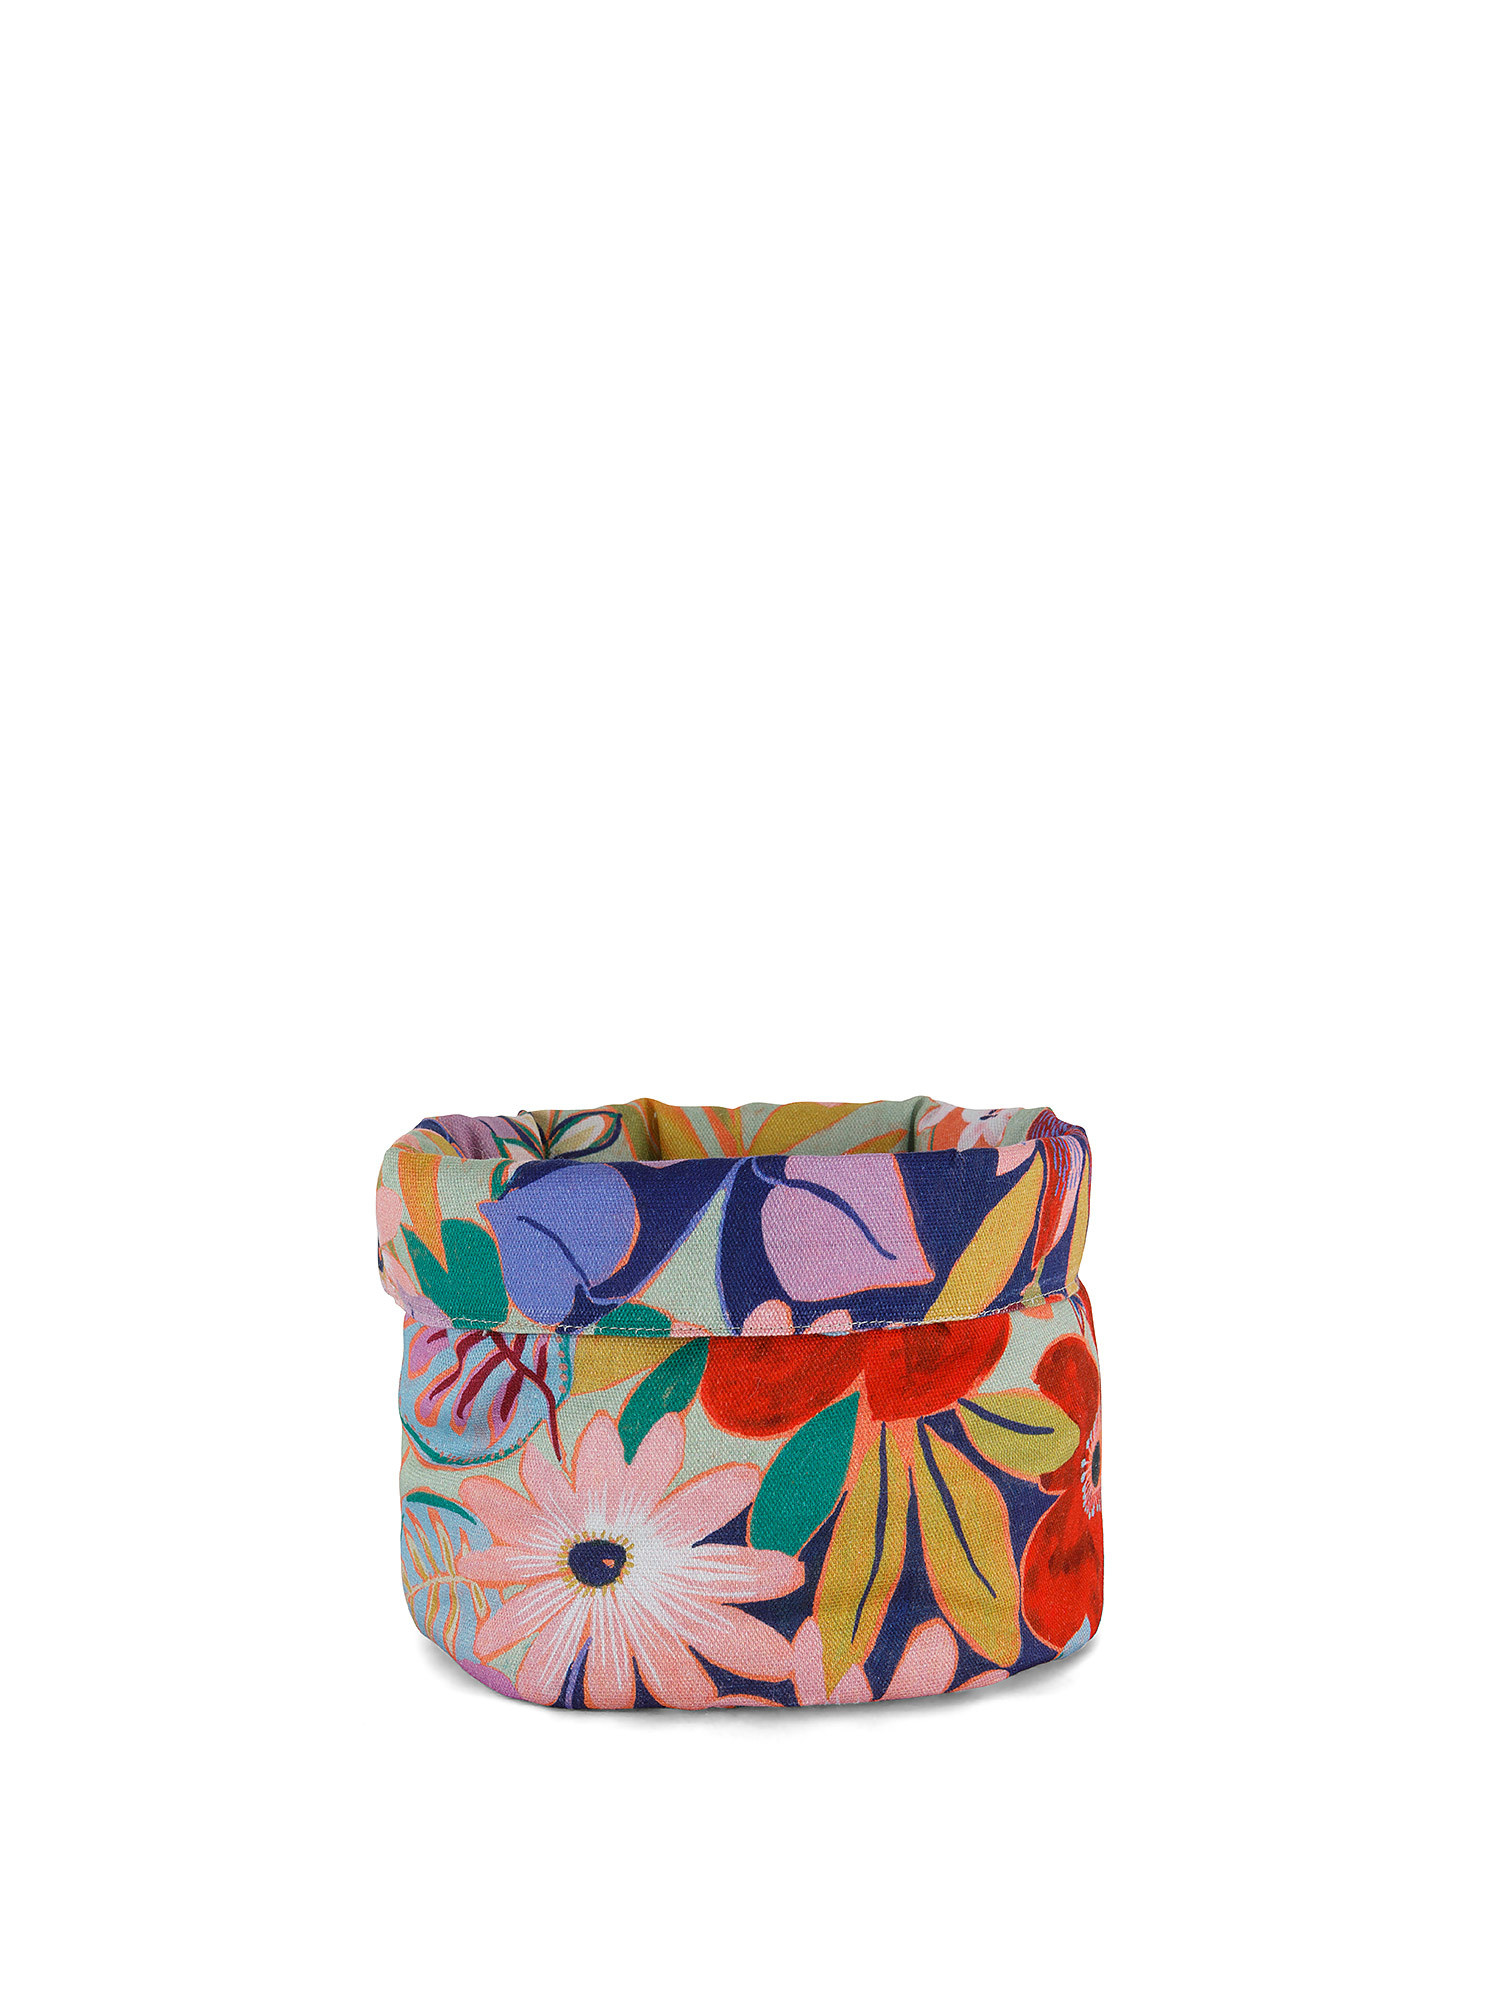 Cestino puro cotone stampa floreale, Multicolor, large image number 0